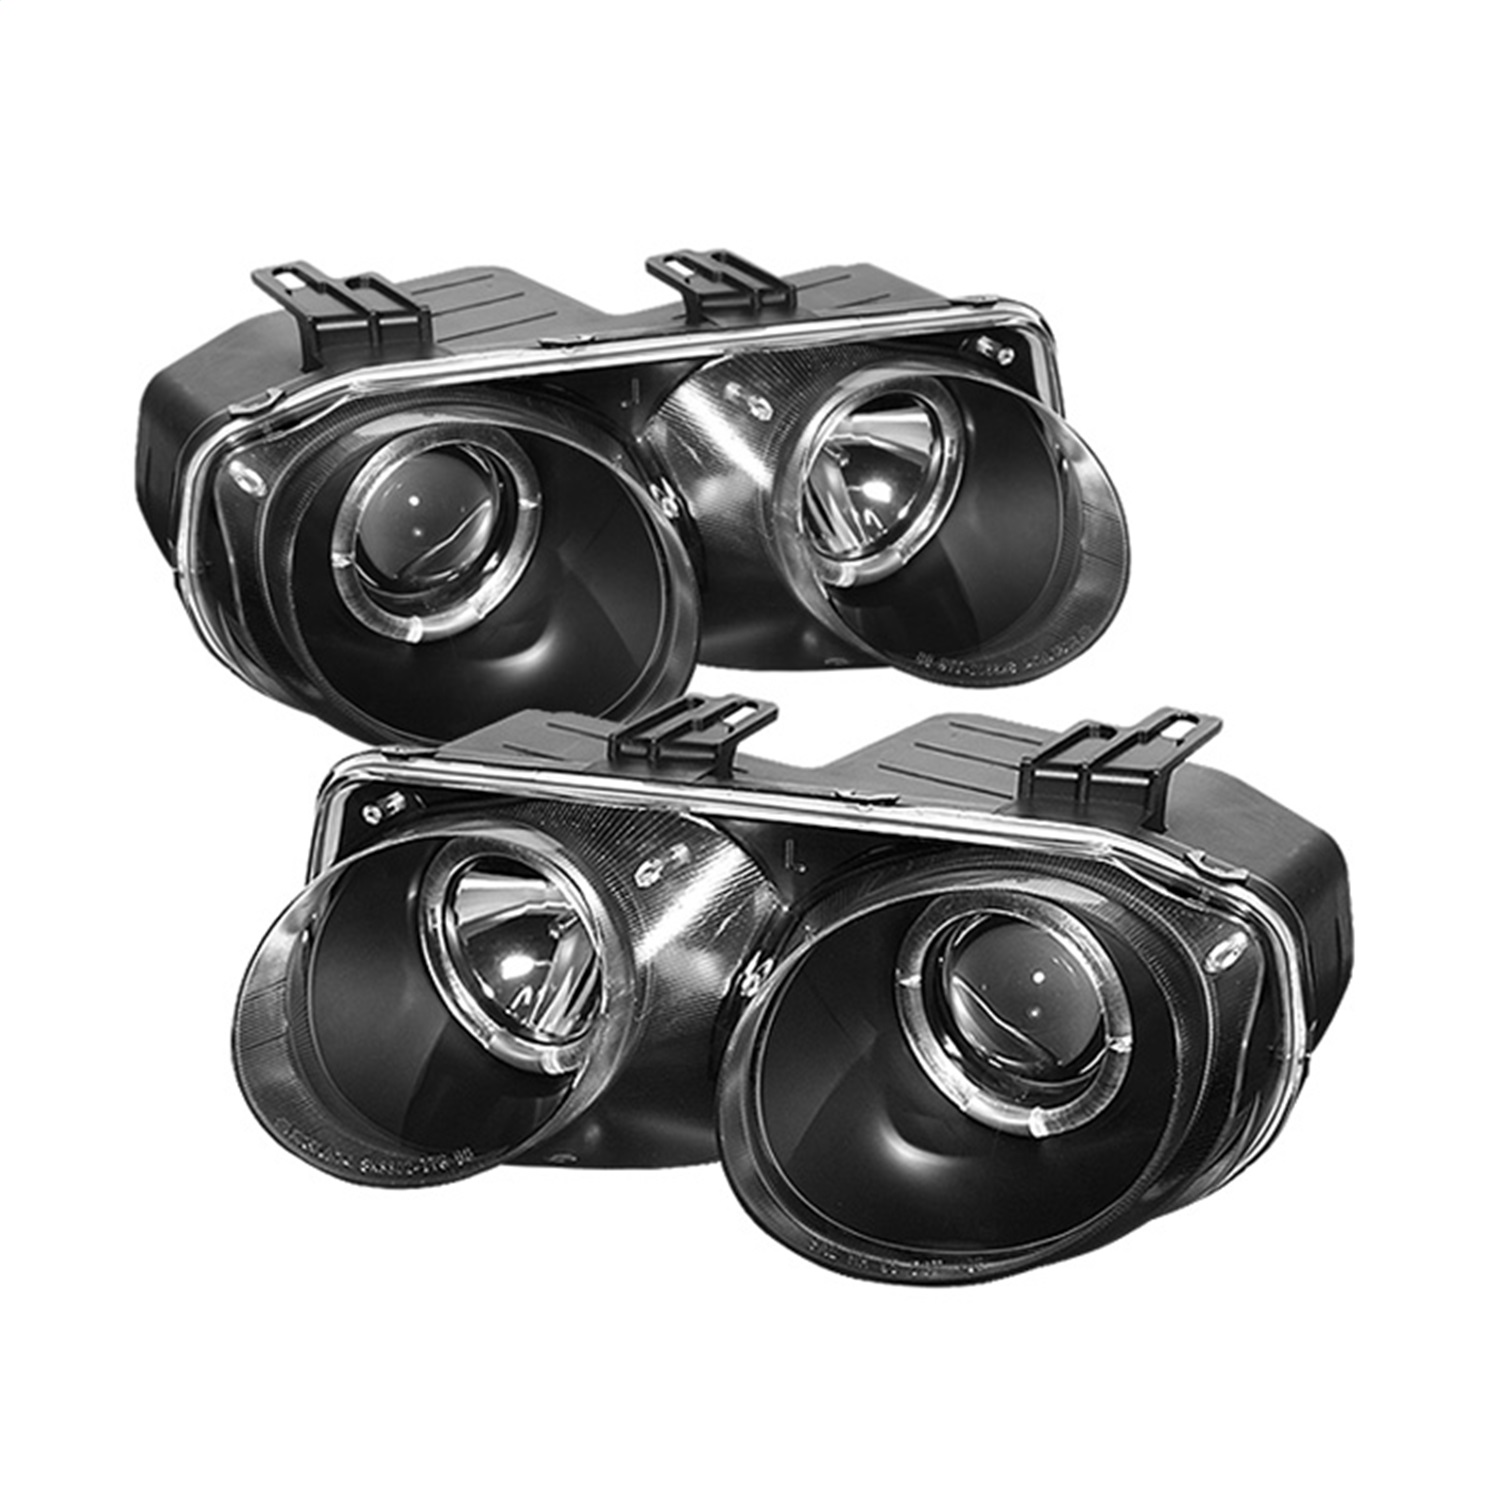 Spyder Auto 5008695 Halo Projector Headlights Fits 98-01 Integra